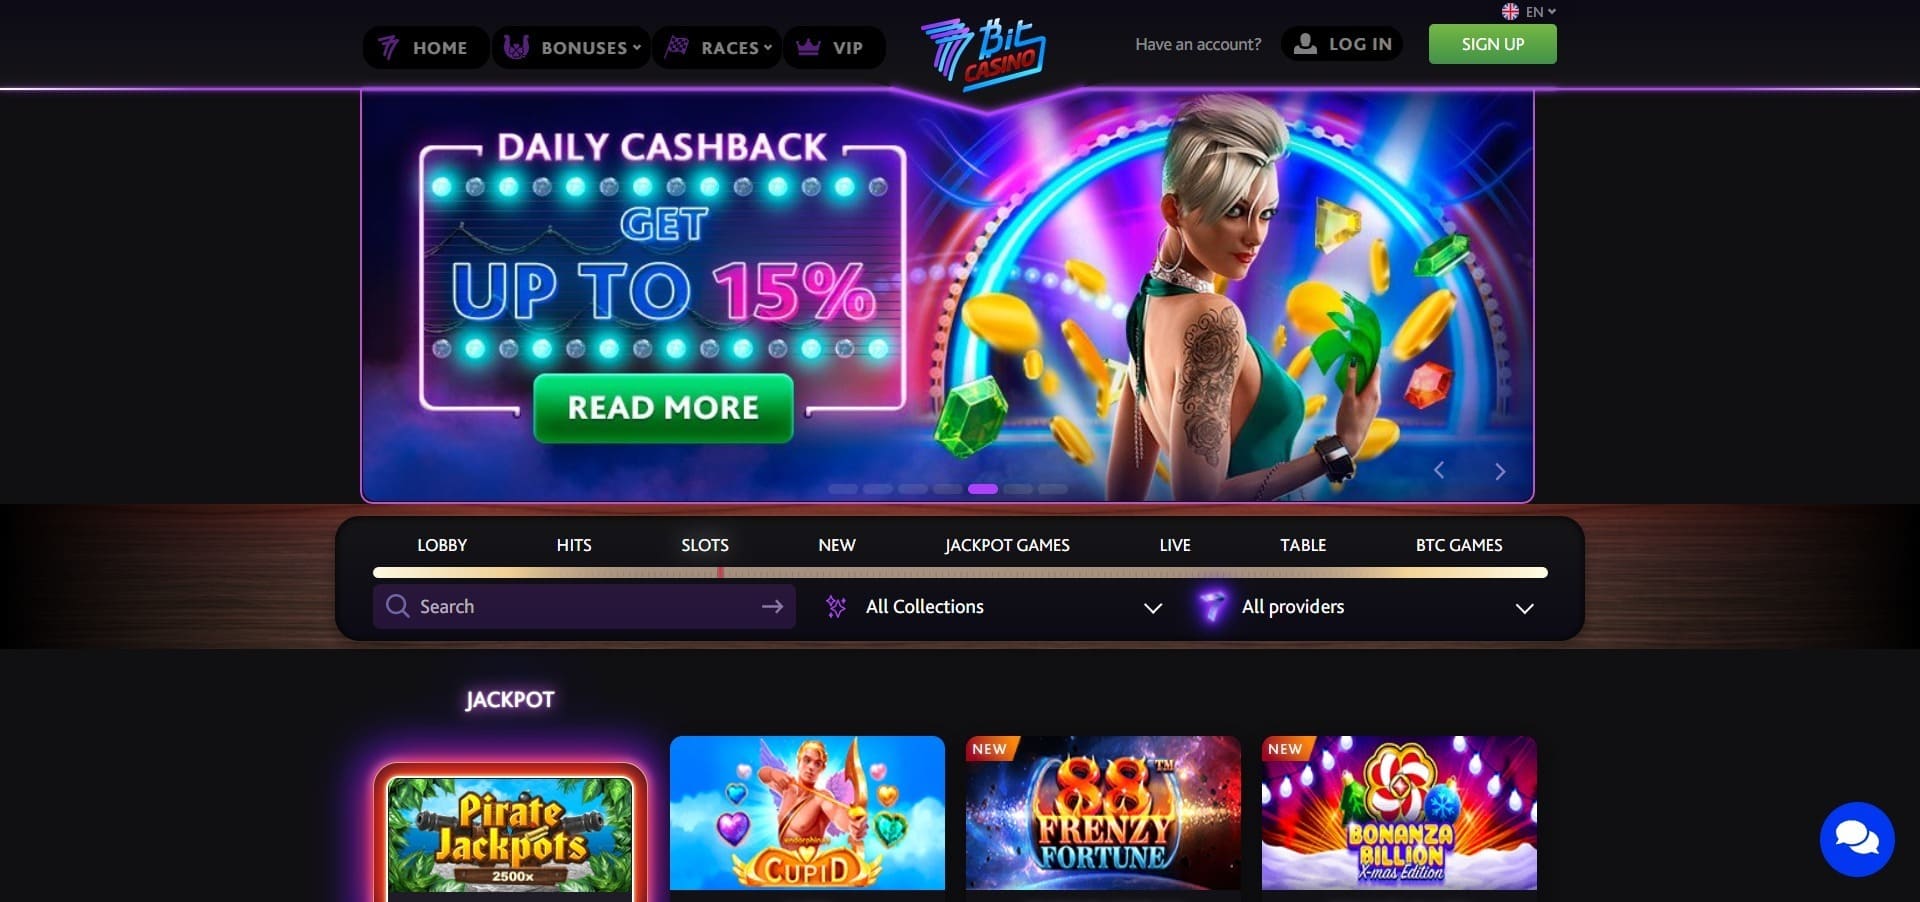 Official website of the 7bit Casino